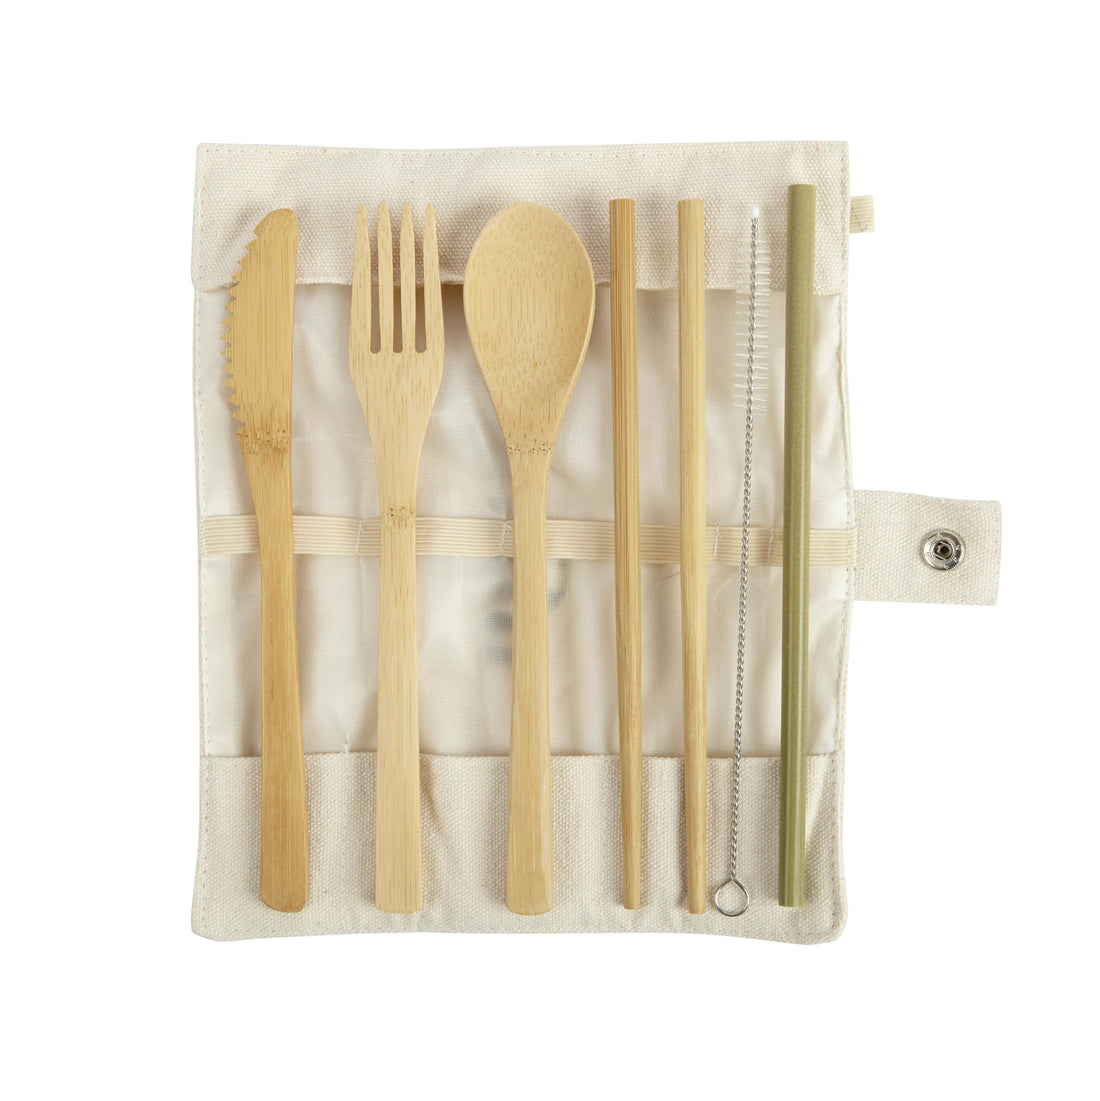 Re:gn Reusable Bamboo Travel Cutlery Set